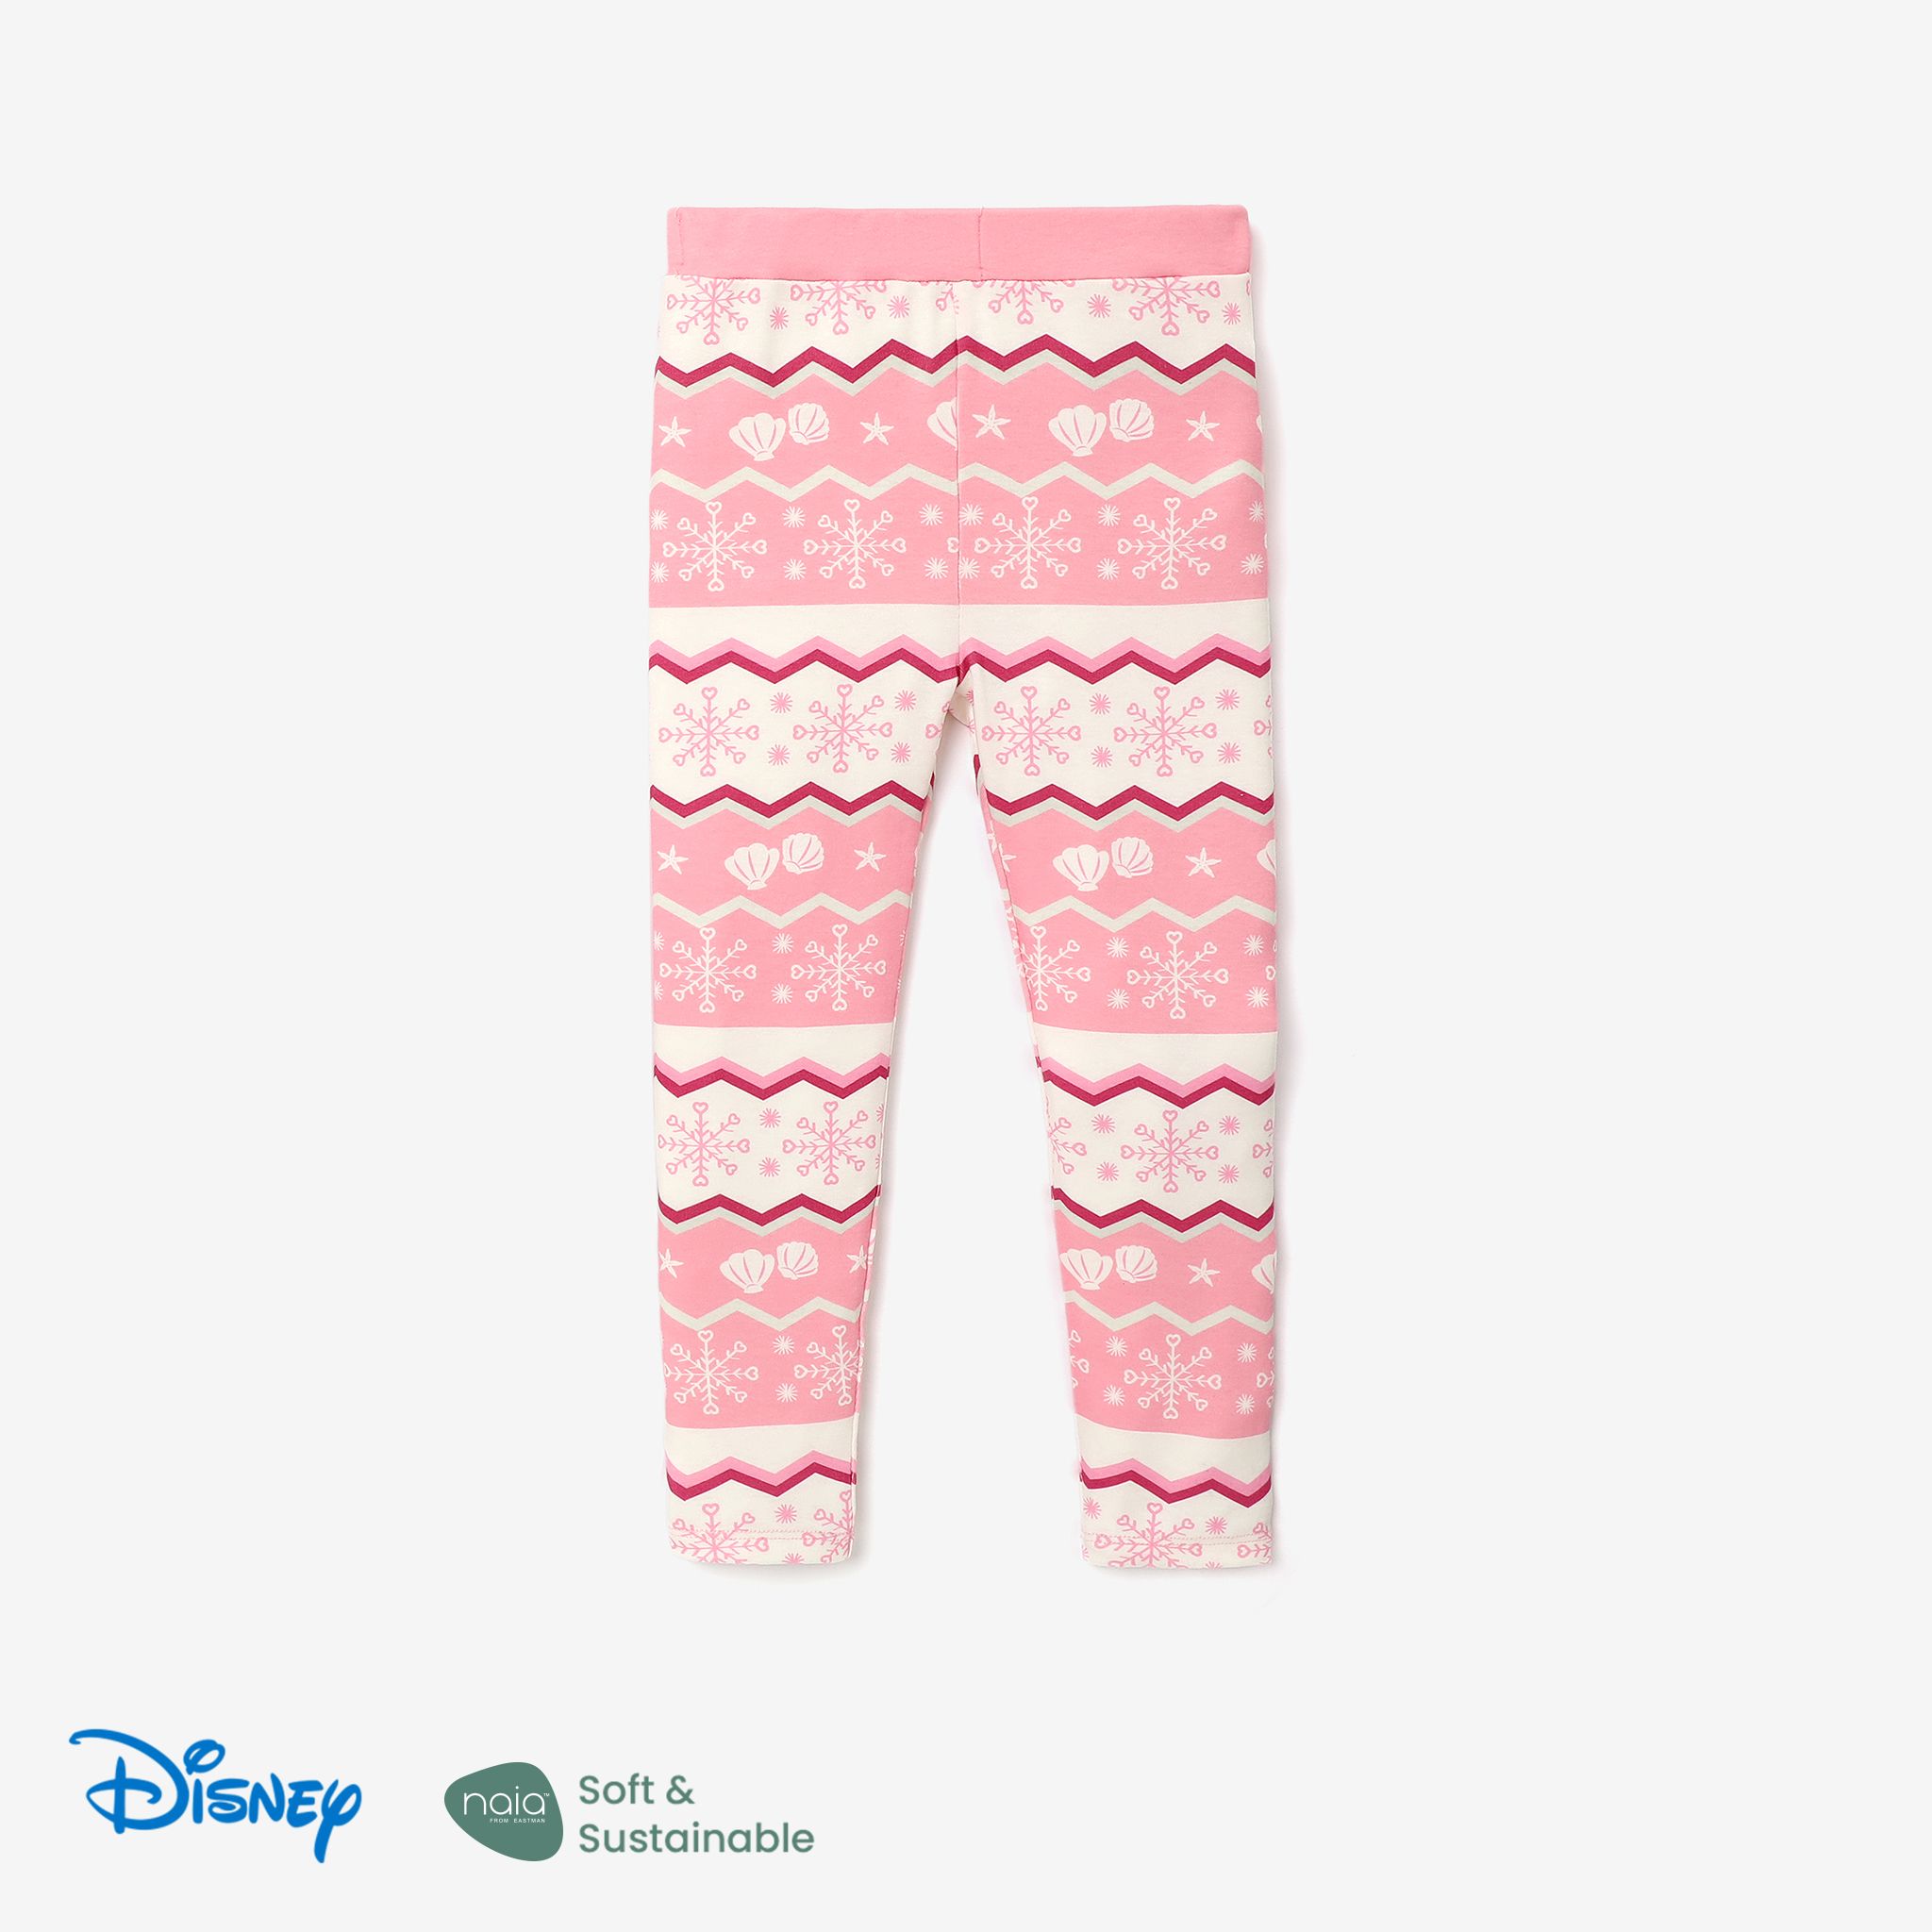 Disney Princess Kid Girl Character Print Hoodie Dress Or Naiaâ¢ Print Snowflake  Pants